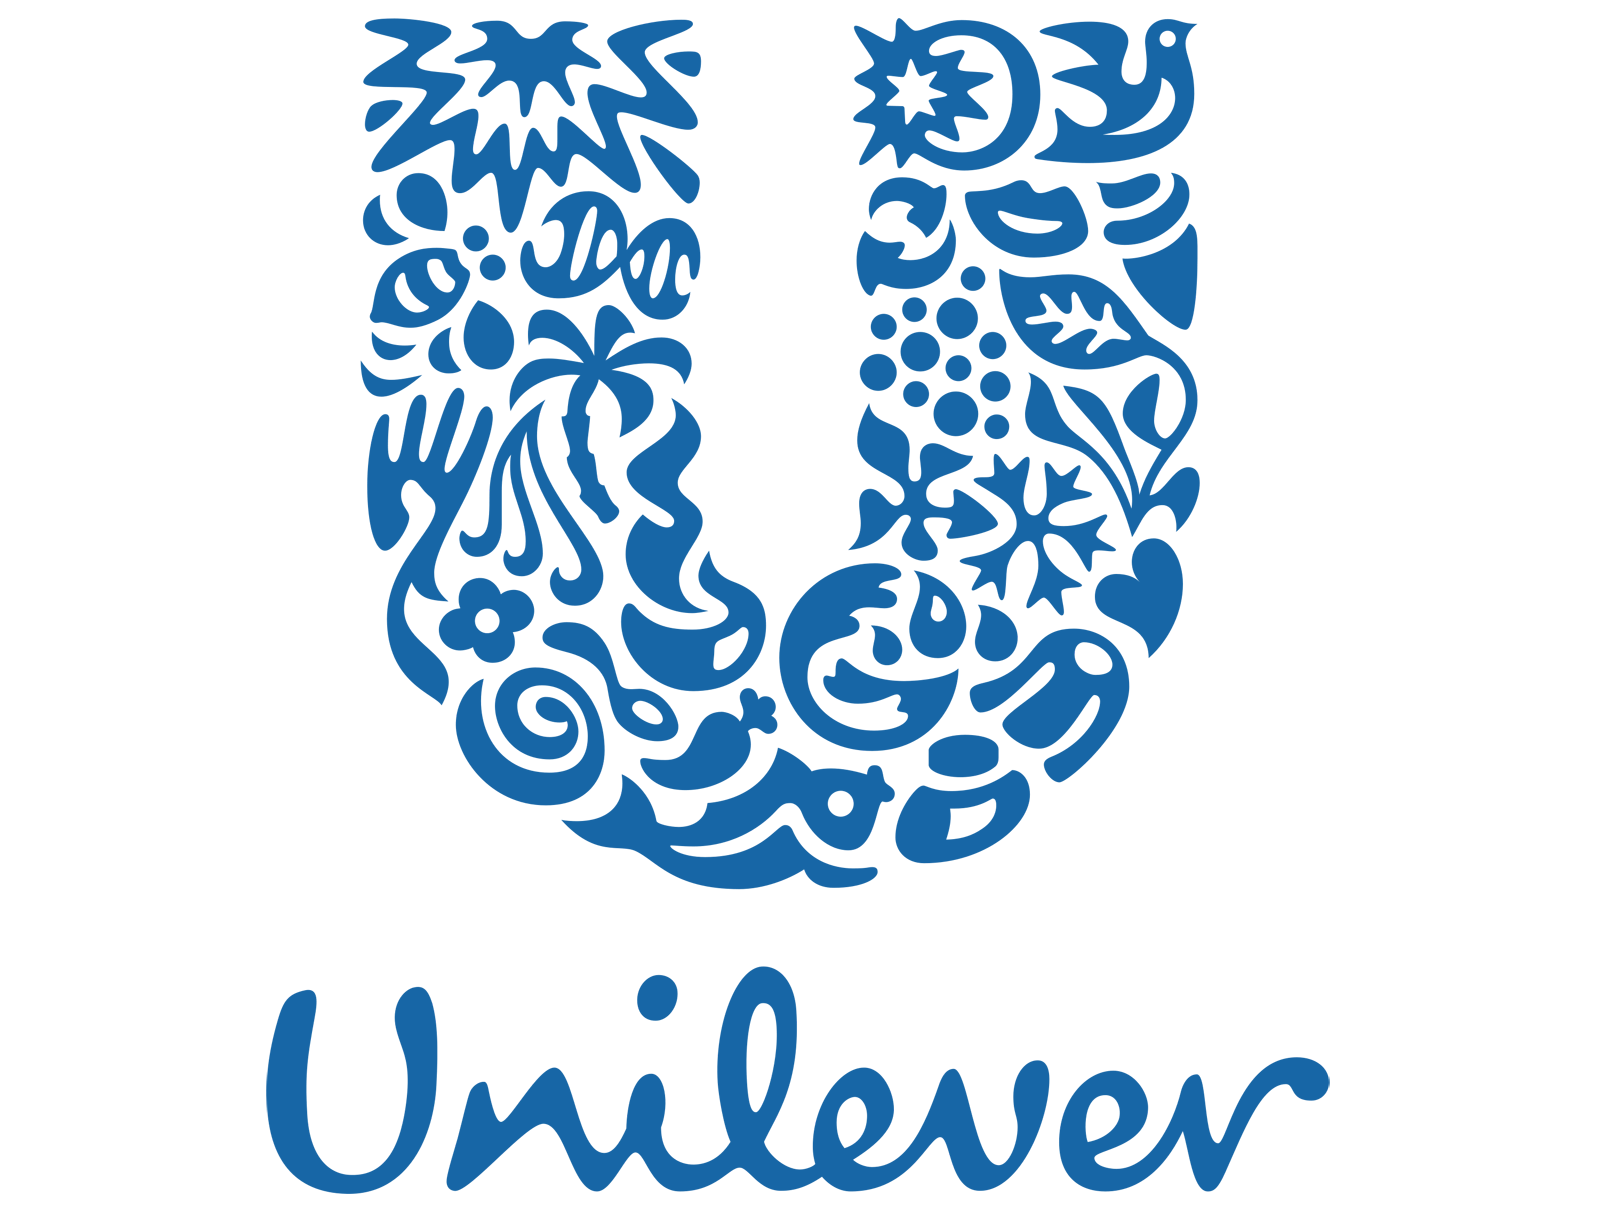 Unilever Logo Png Images, Fre